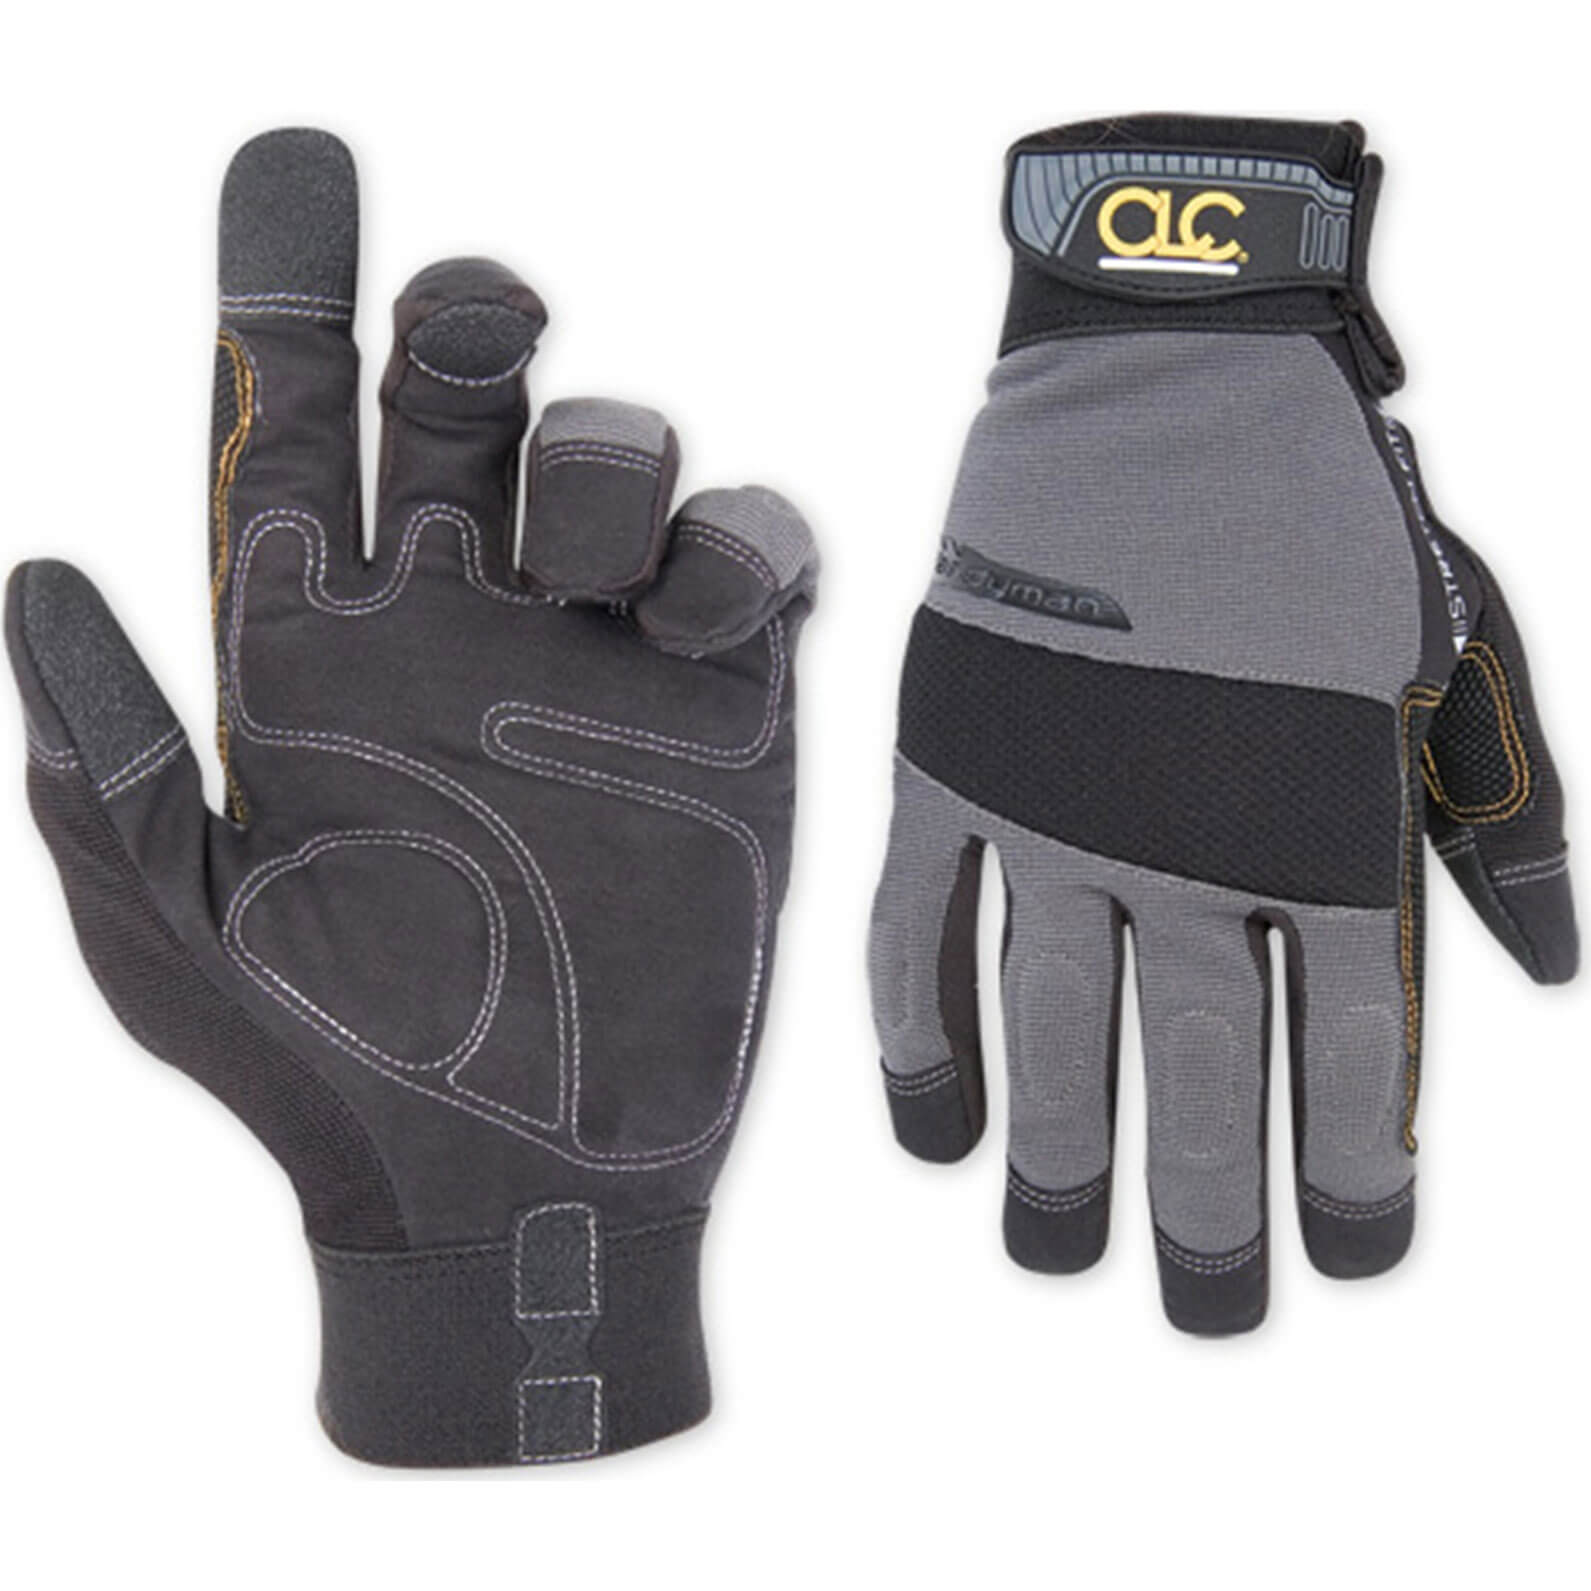 Kunys Flex Grip Handyman Gloves L